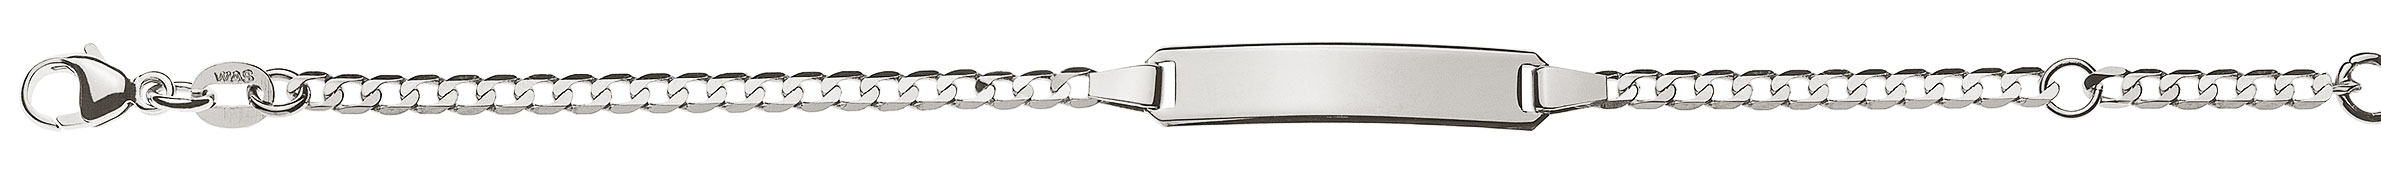 AURONOS Prestige ID-Bracelet 18k Weissgold Panzerkette diamantiert 18cm